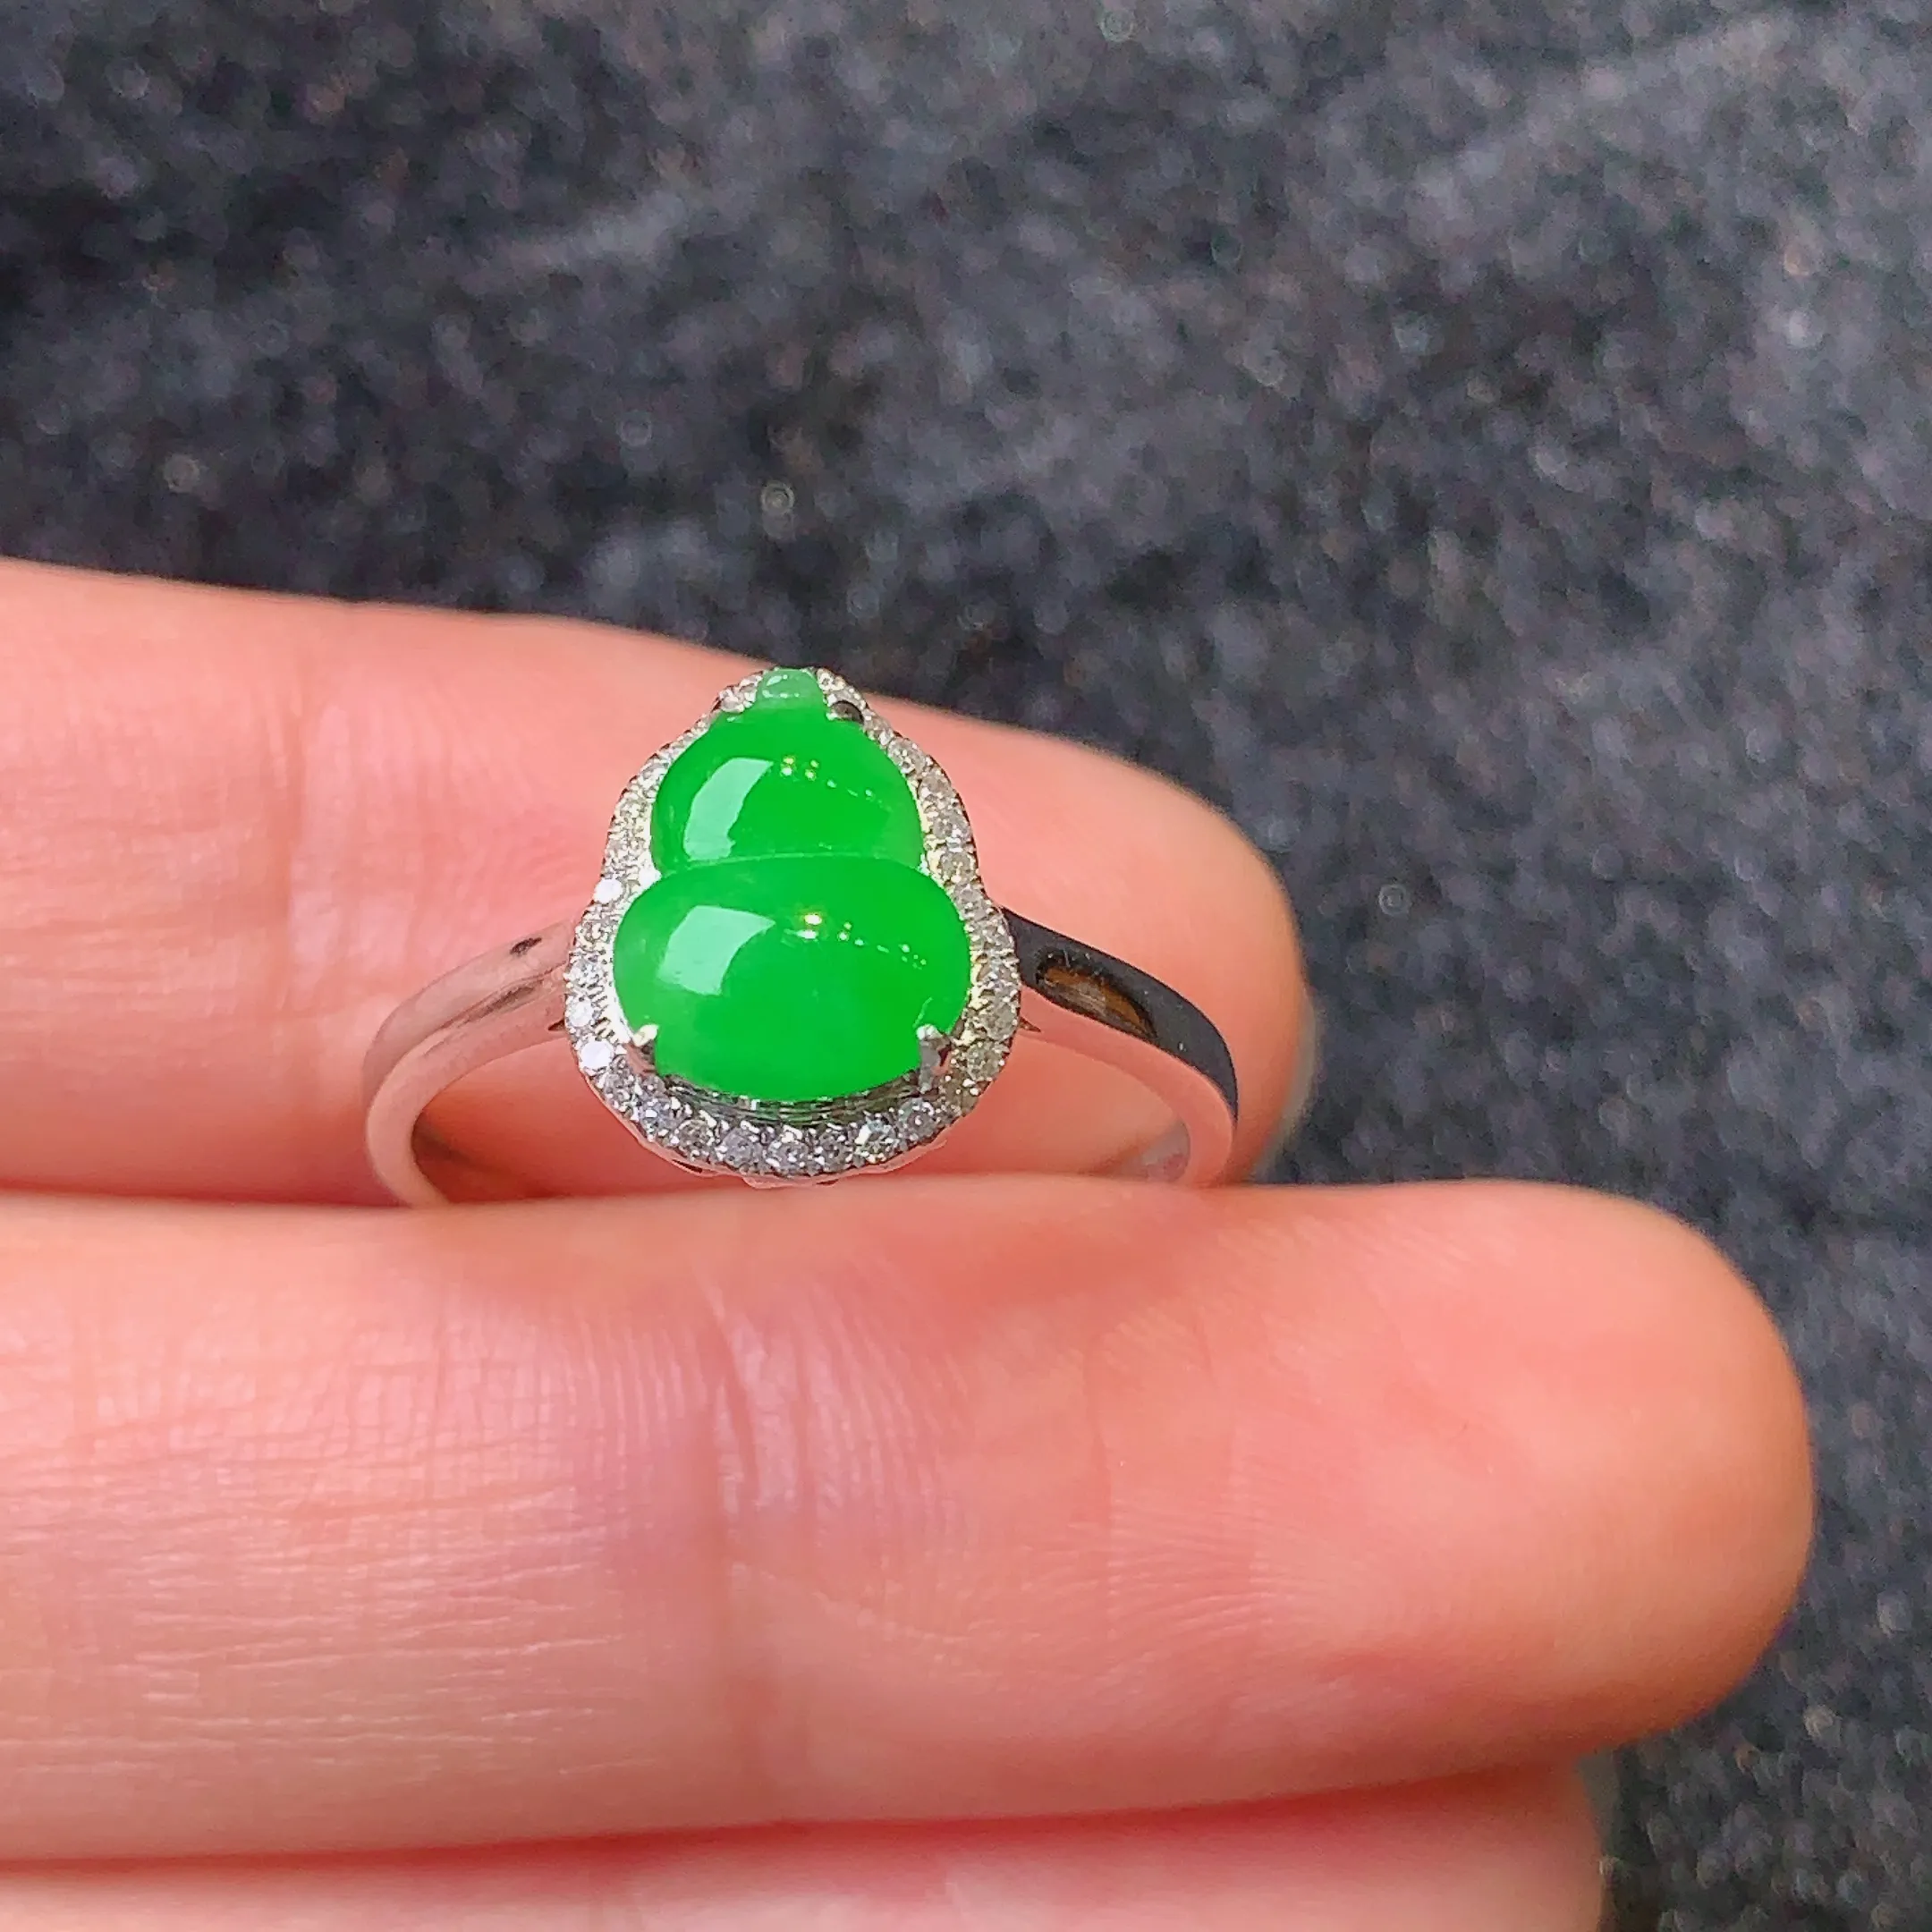 18k金钻镶嵌满绿葫芦戒指 玉质细腻 款式新颖时尚高贵优雅 圈口13.5 整体尺寸10.9*8.9*6.3